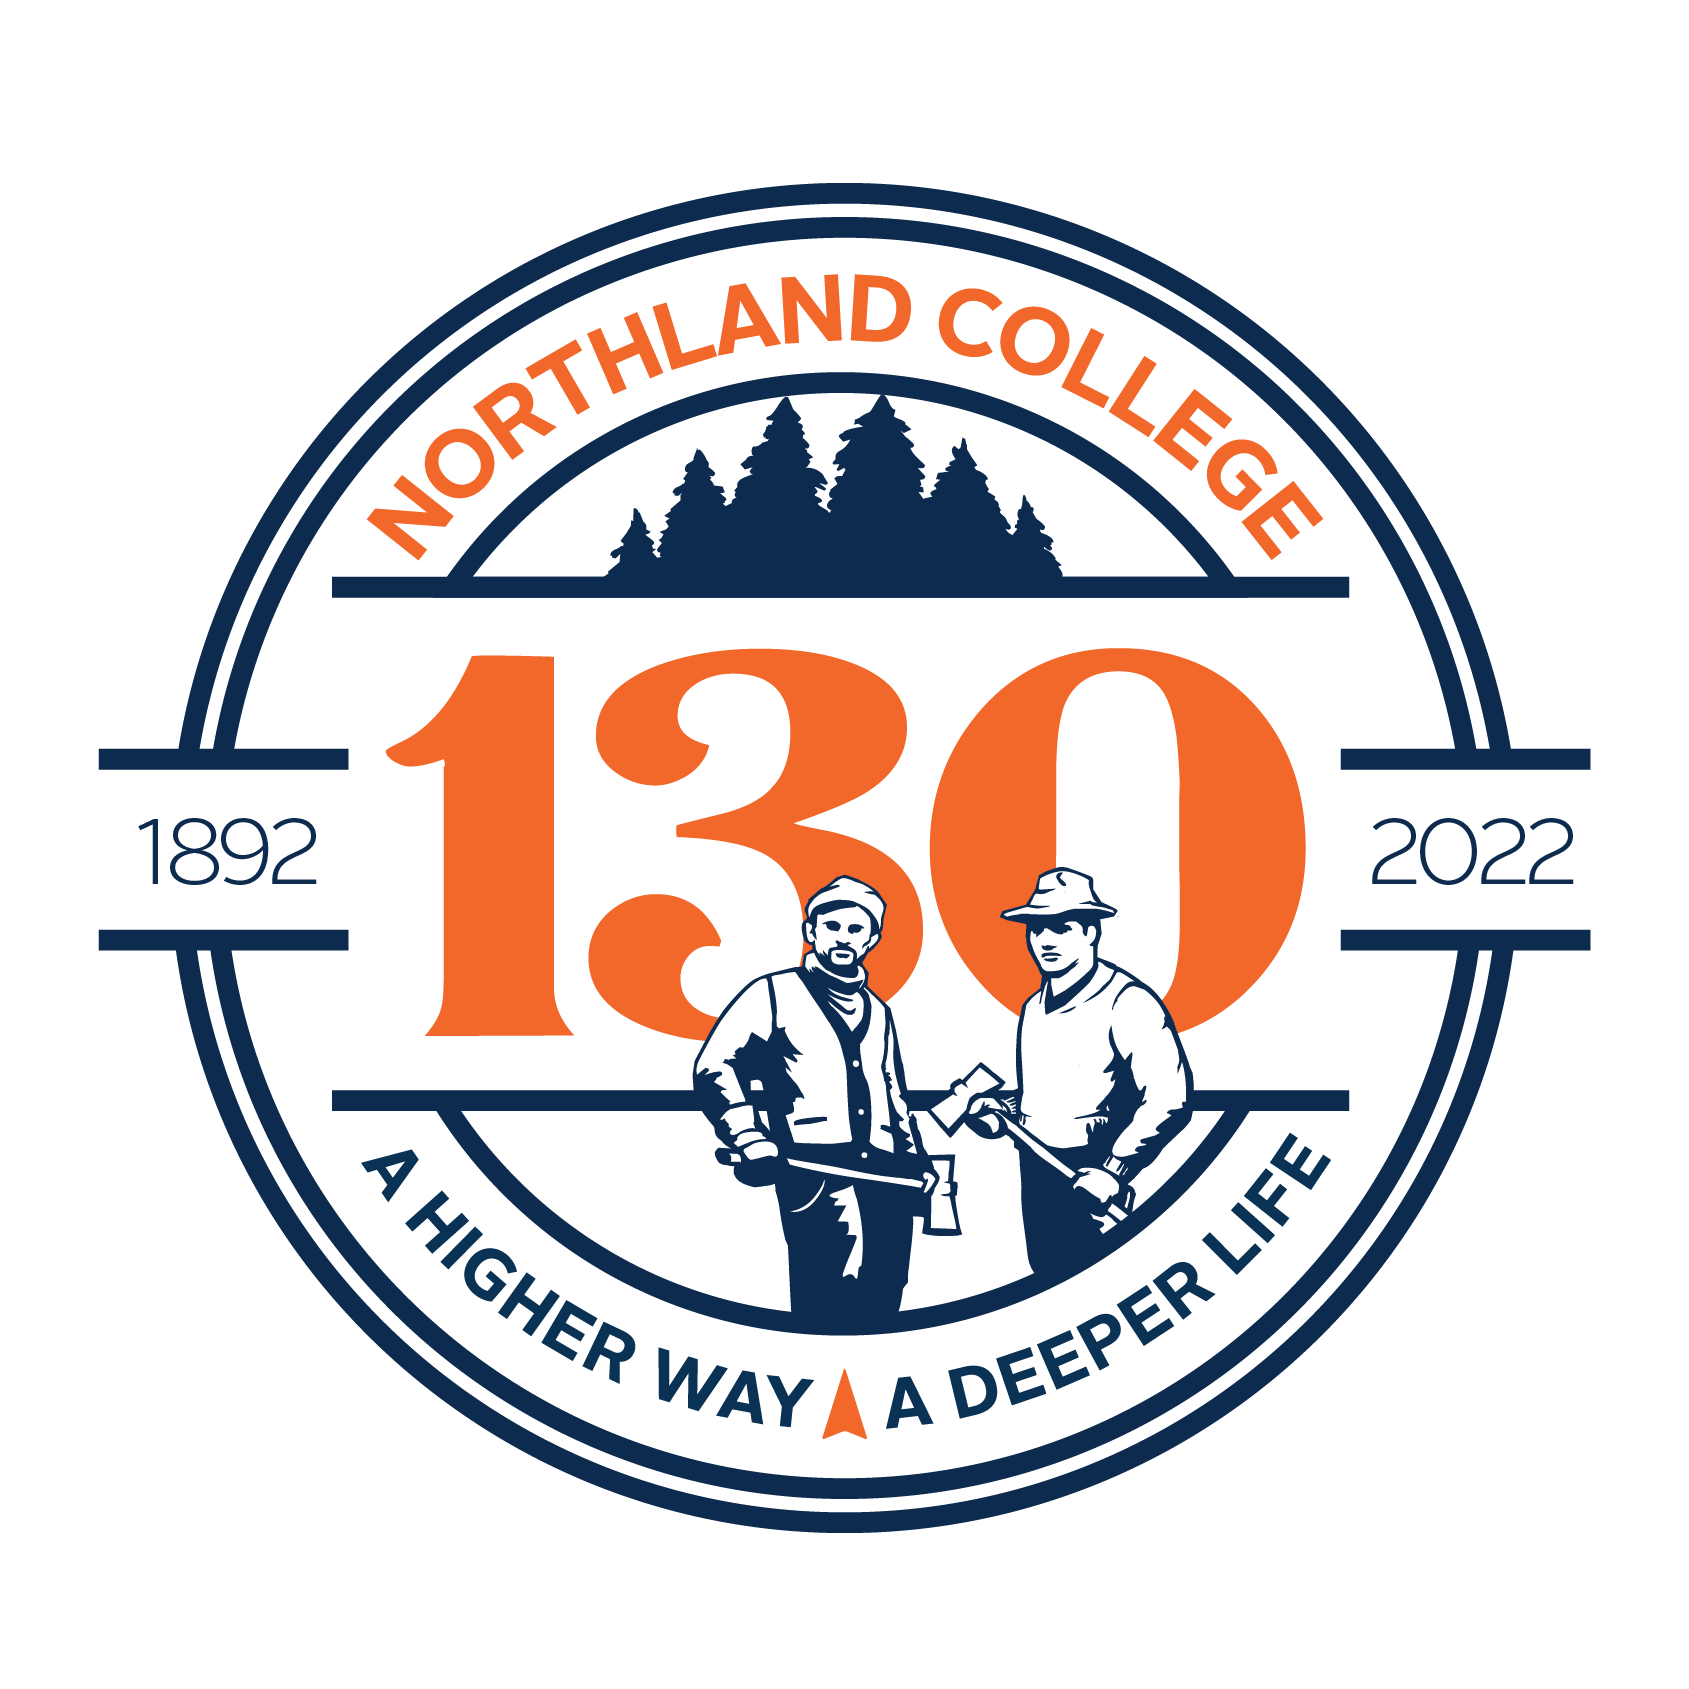 Northland College 130th Logo